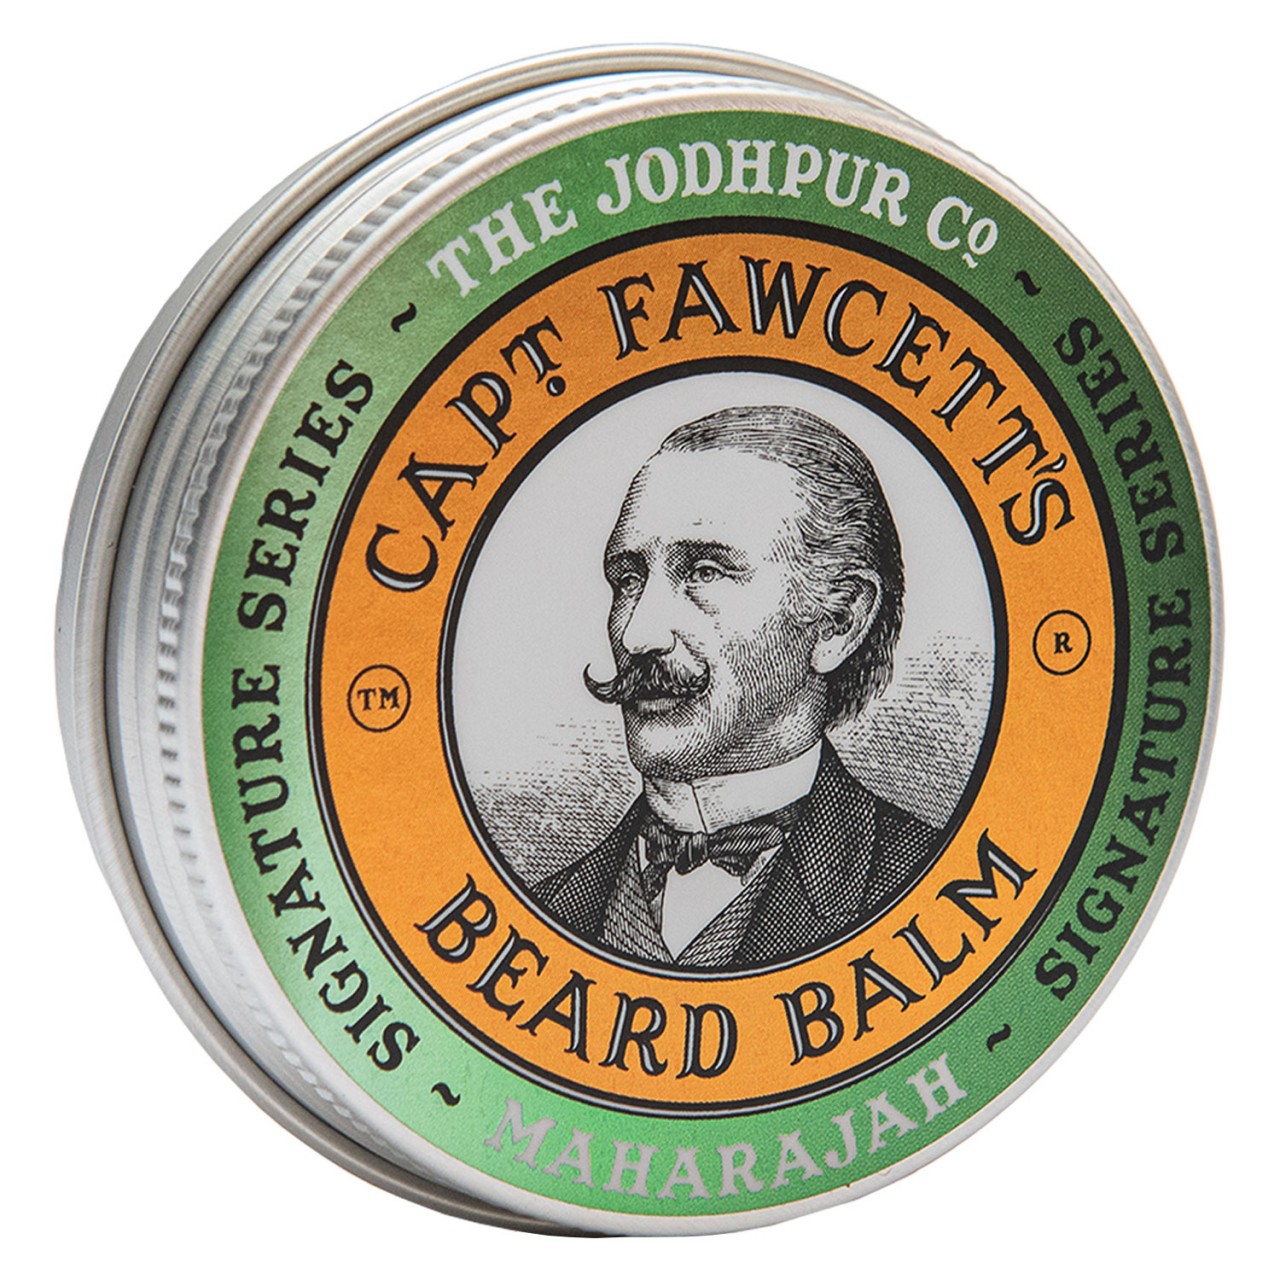 Capt. Fawcett Care - Maharajah Beard Balm von Captain Fawcett